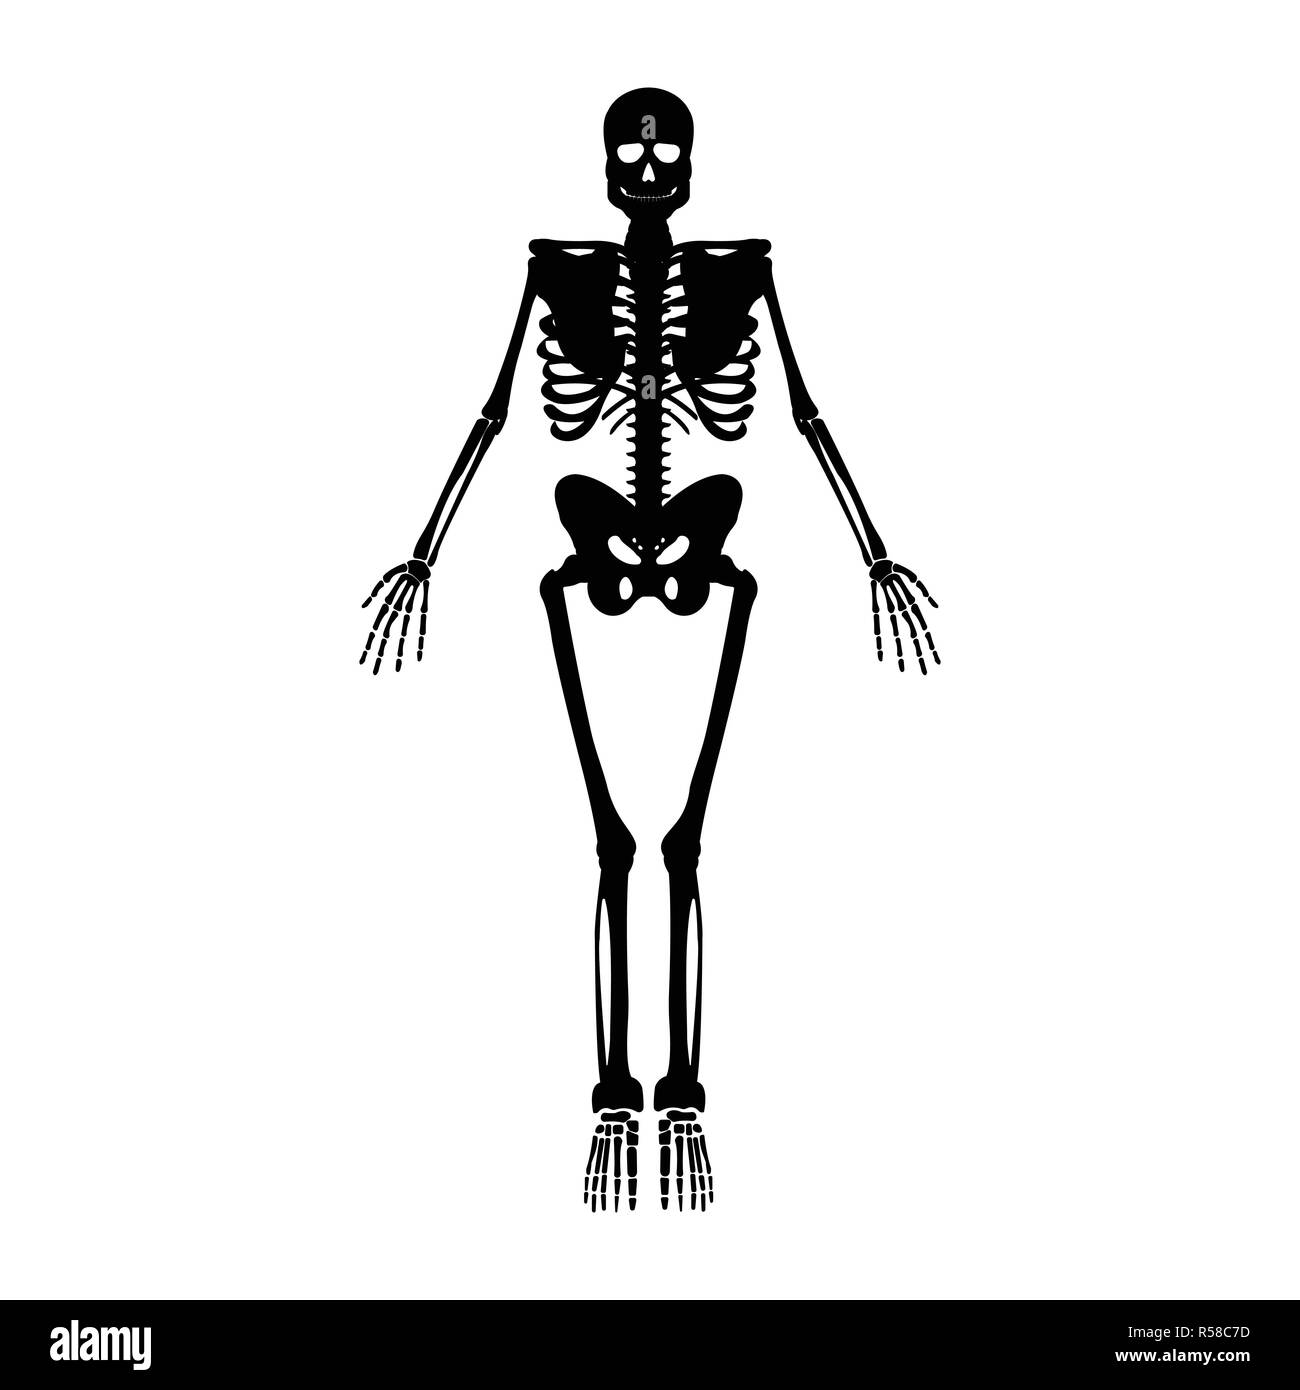 Skeleton icon. Human Skeleton front side Silhouette. Isolated on White Background. Vector illustration. Stock Vector